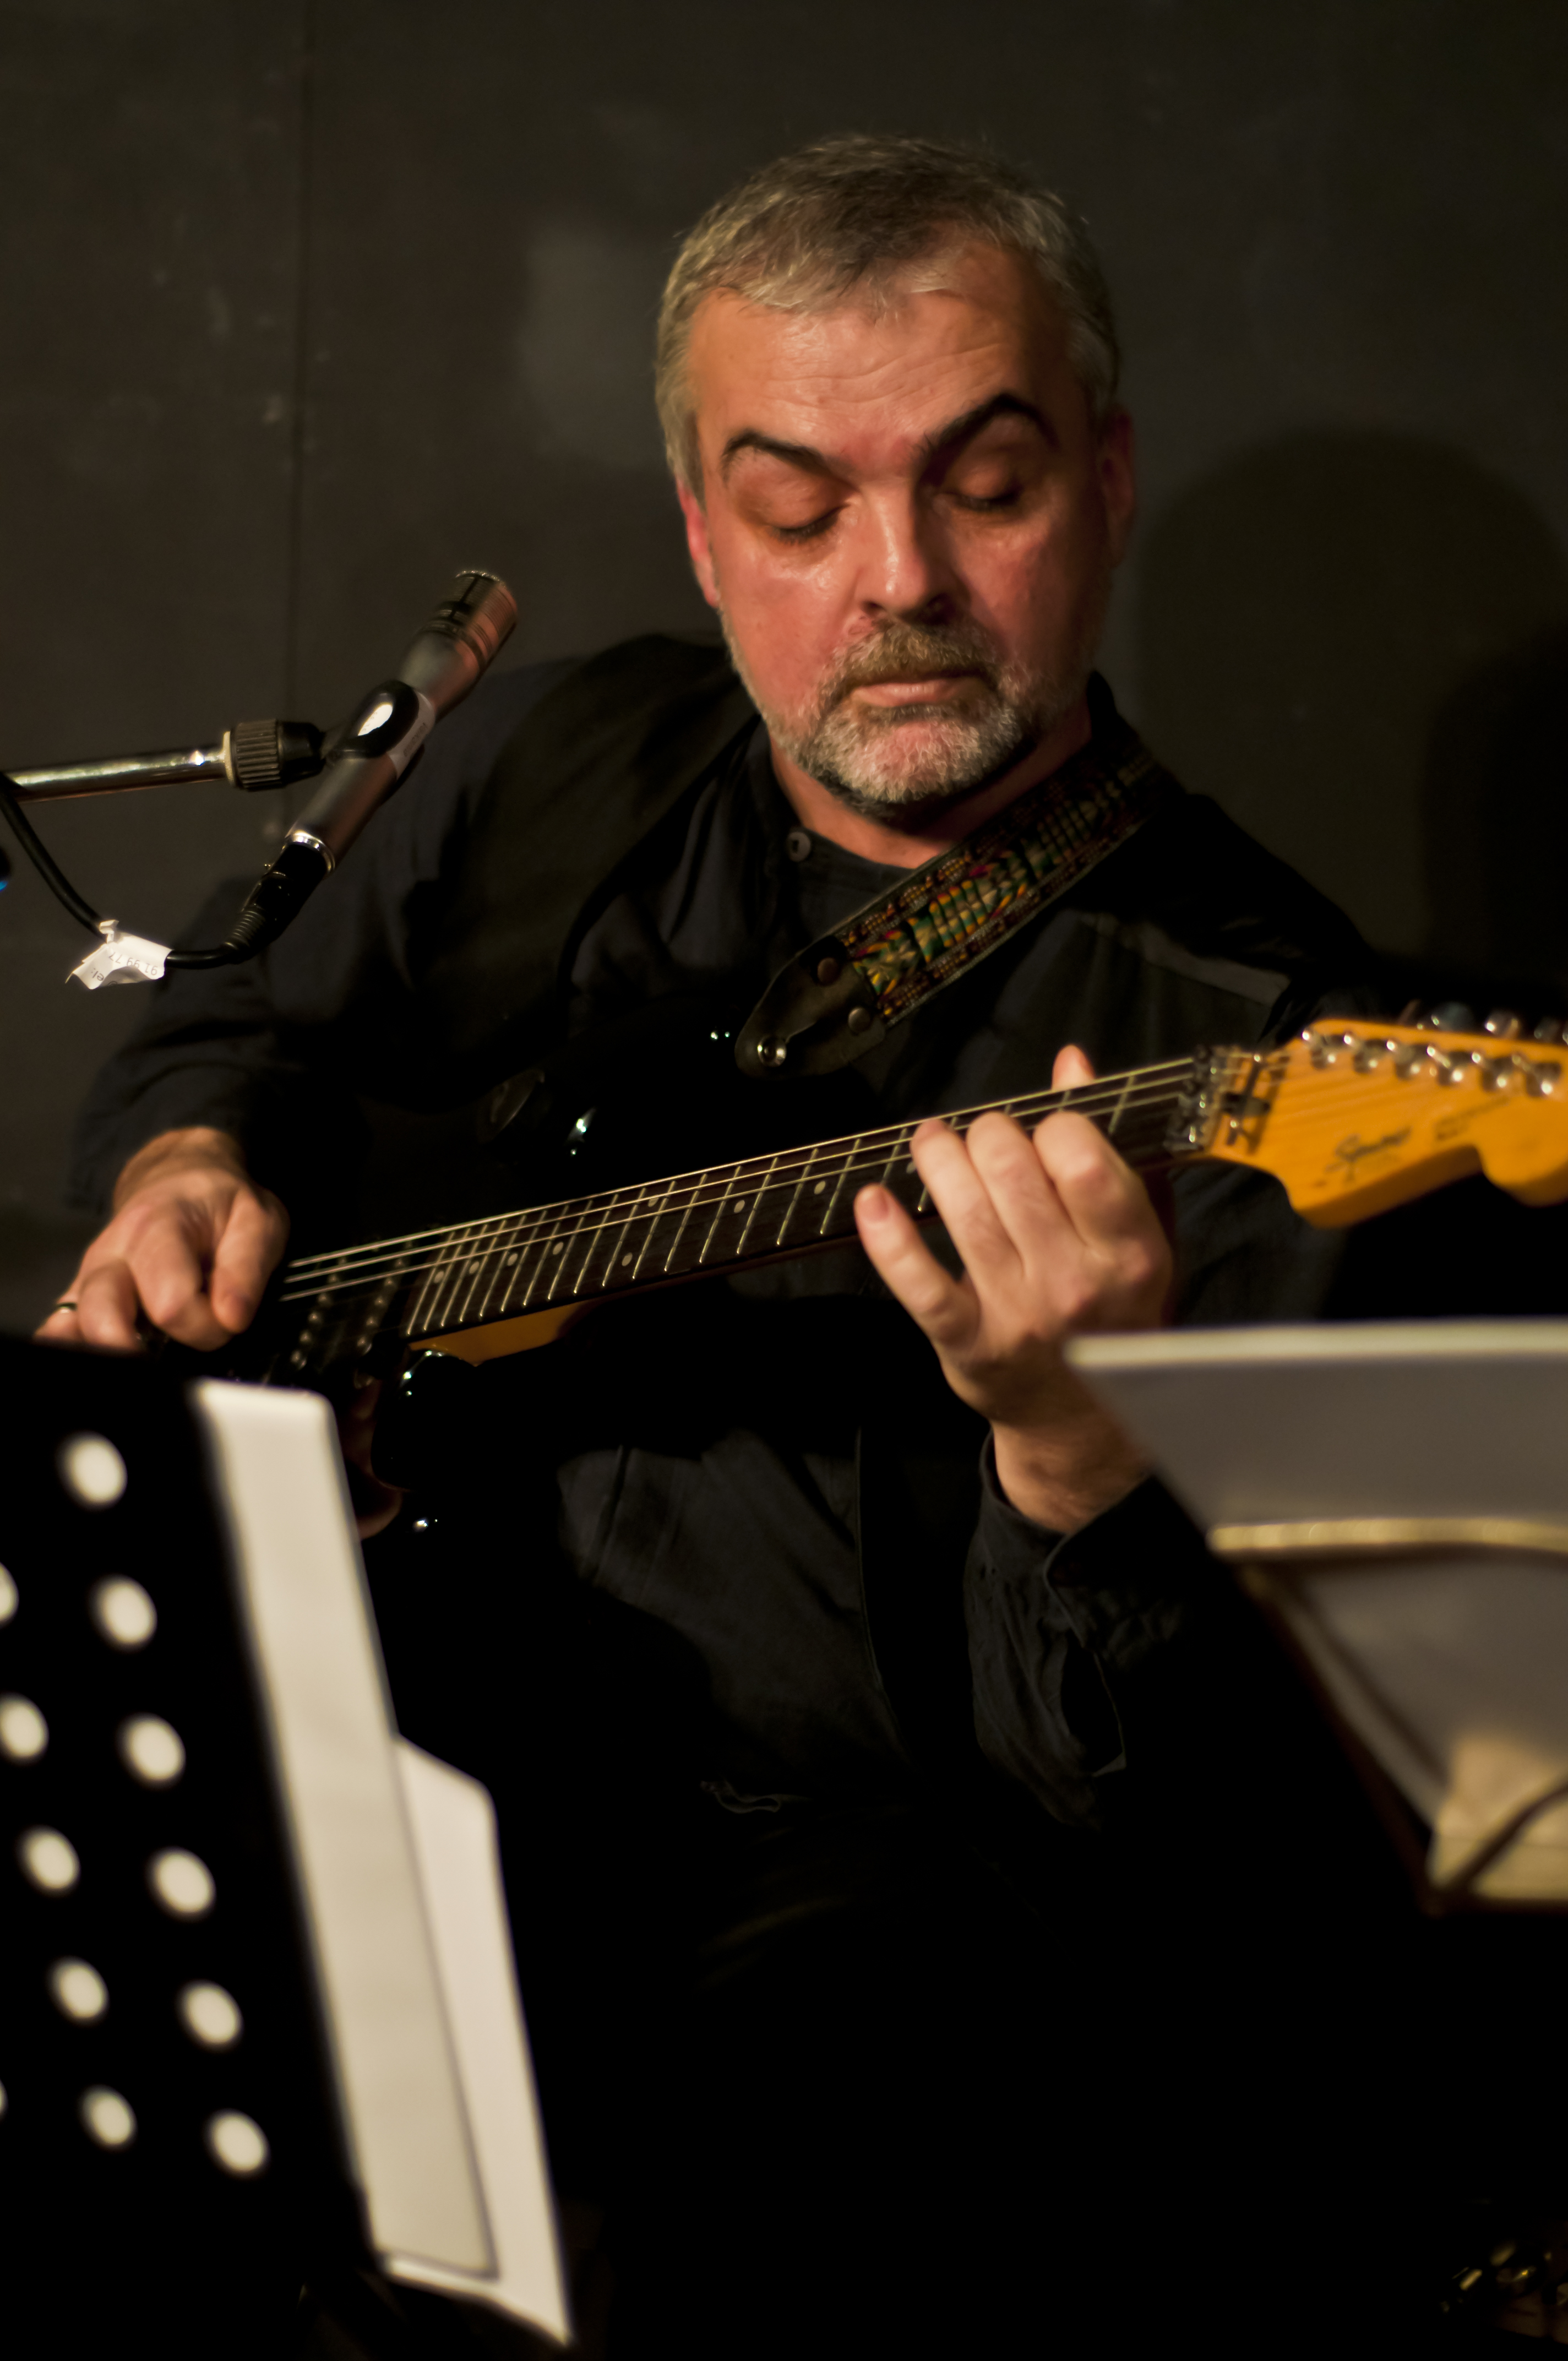 The London Bouzouki Player - Greek Musician